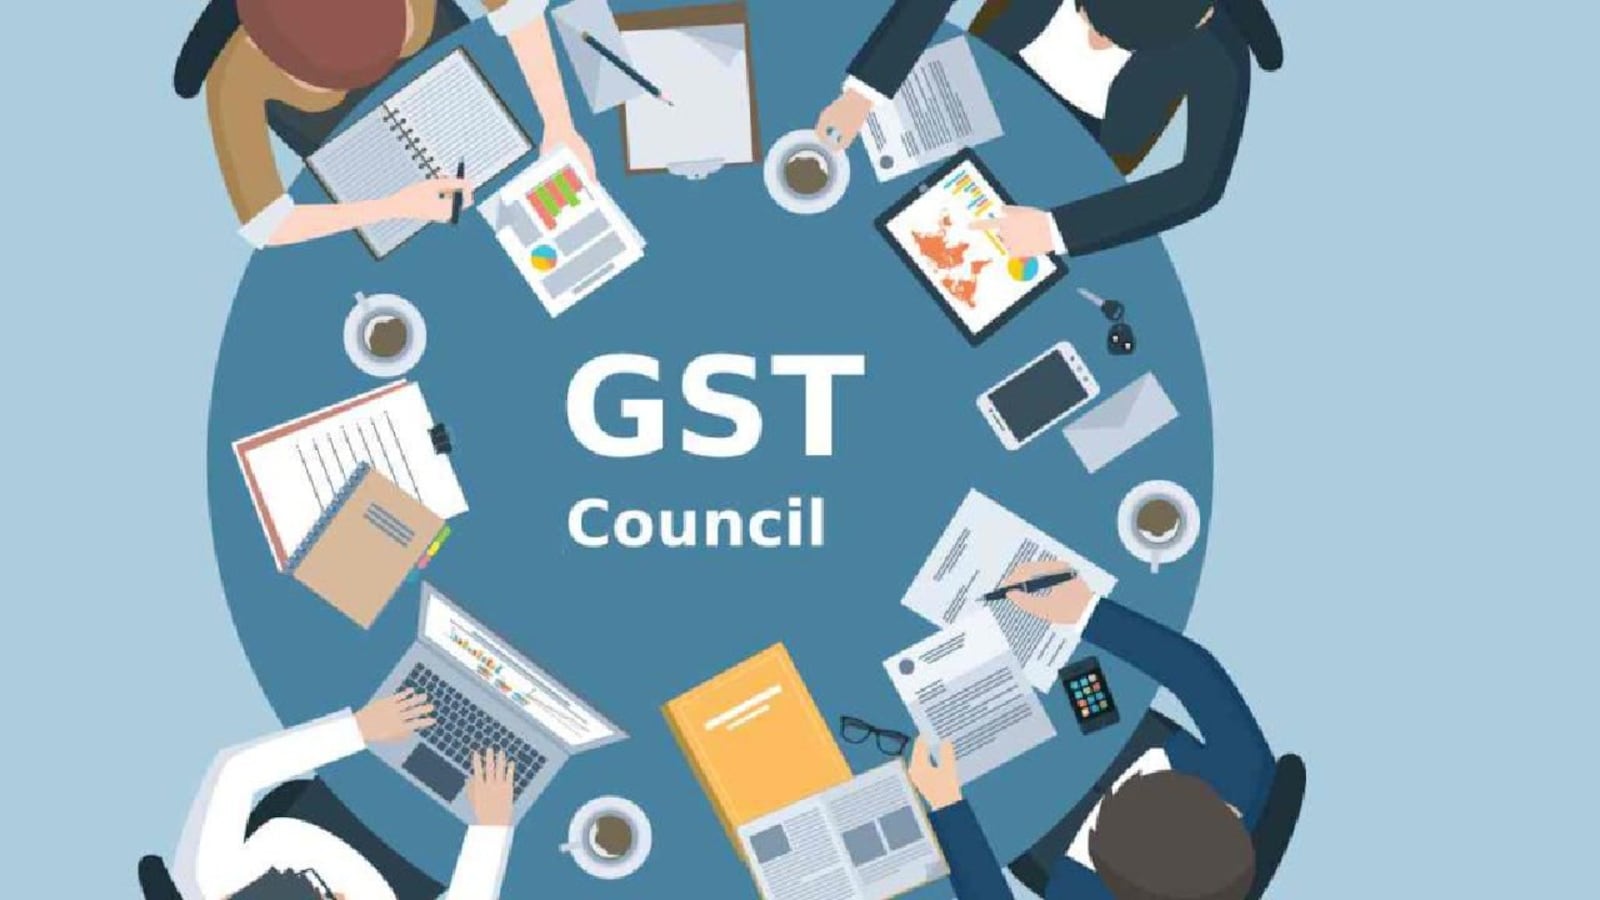 GST Council tackling issues but major headaches remain